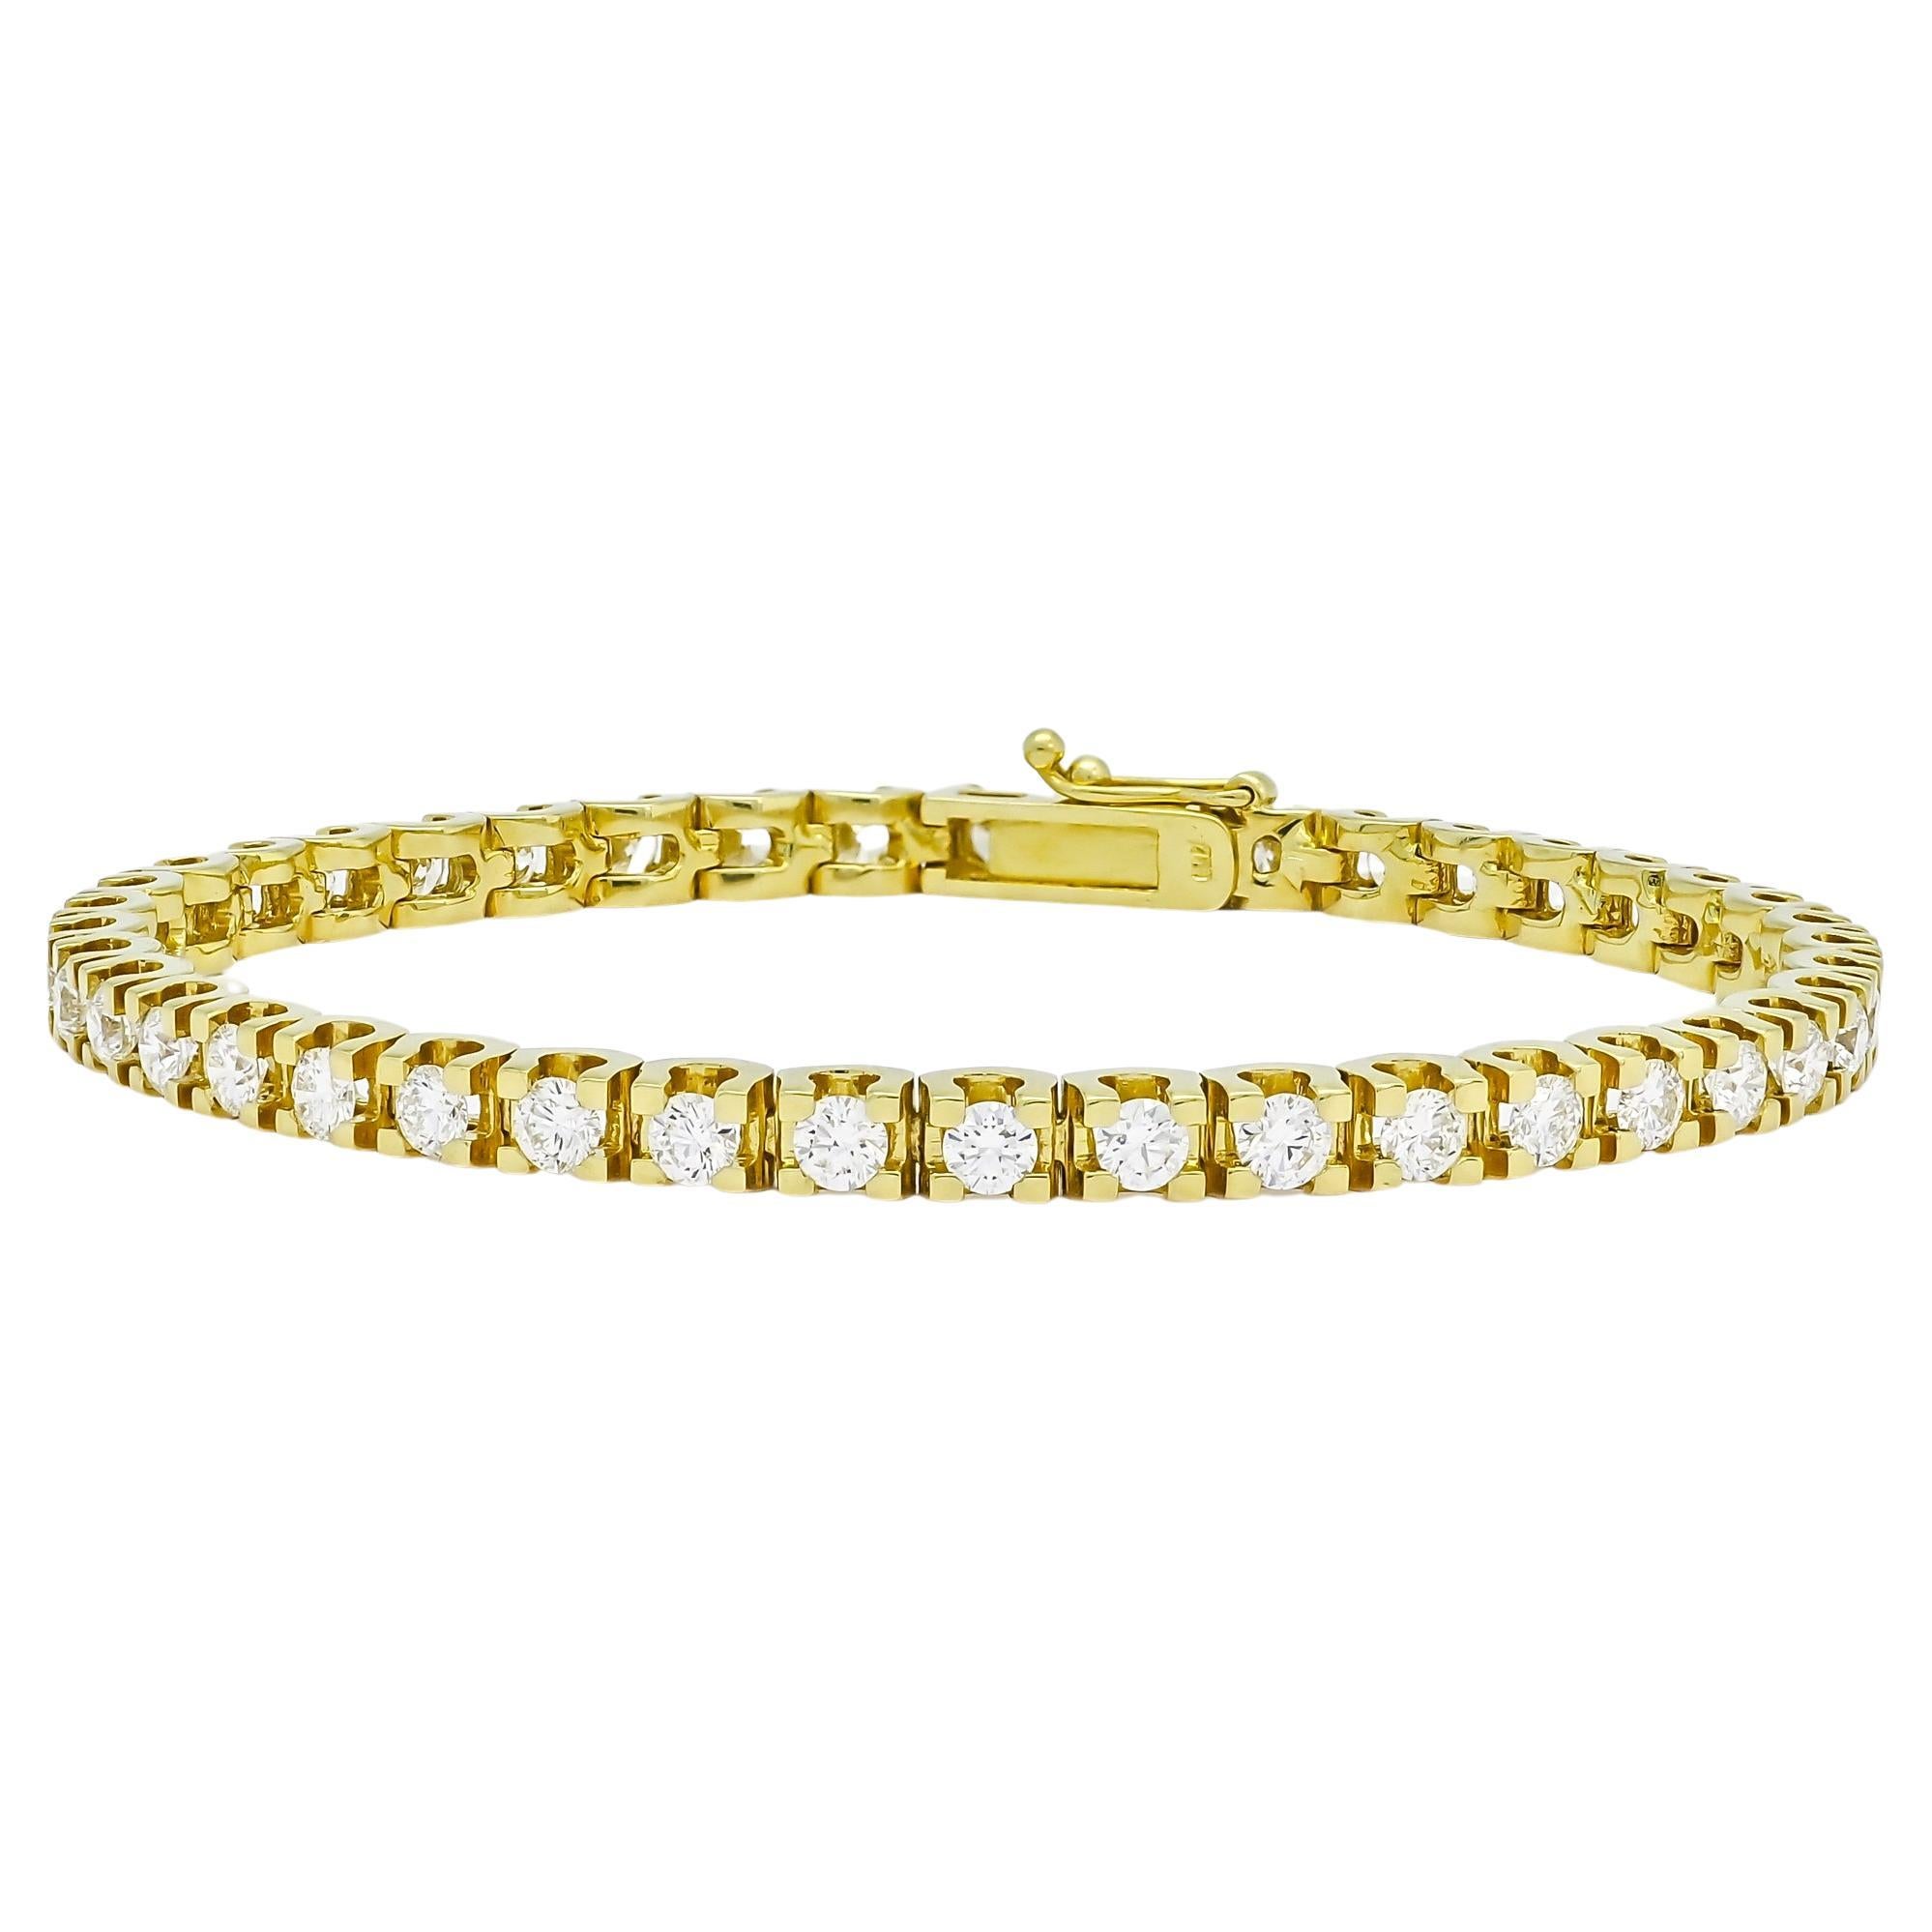 Natural Diamond Bracelet 4.04ct 18 Karat Yellow Gold Tennis Bracelet 